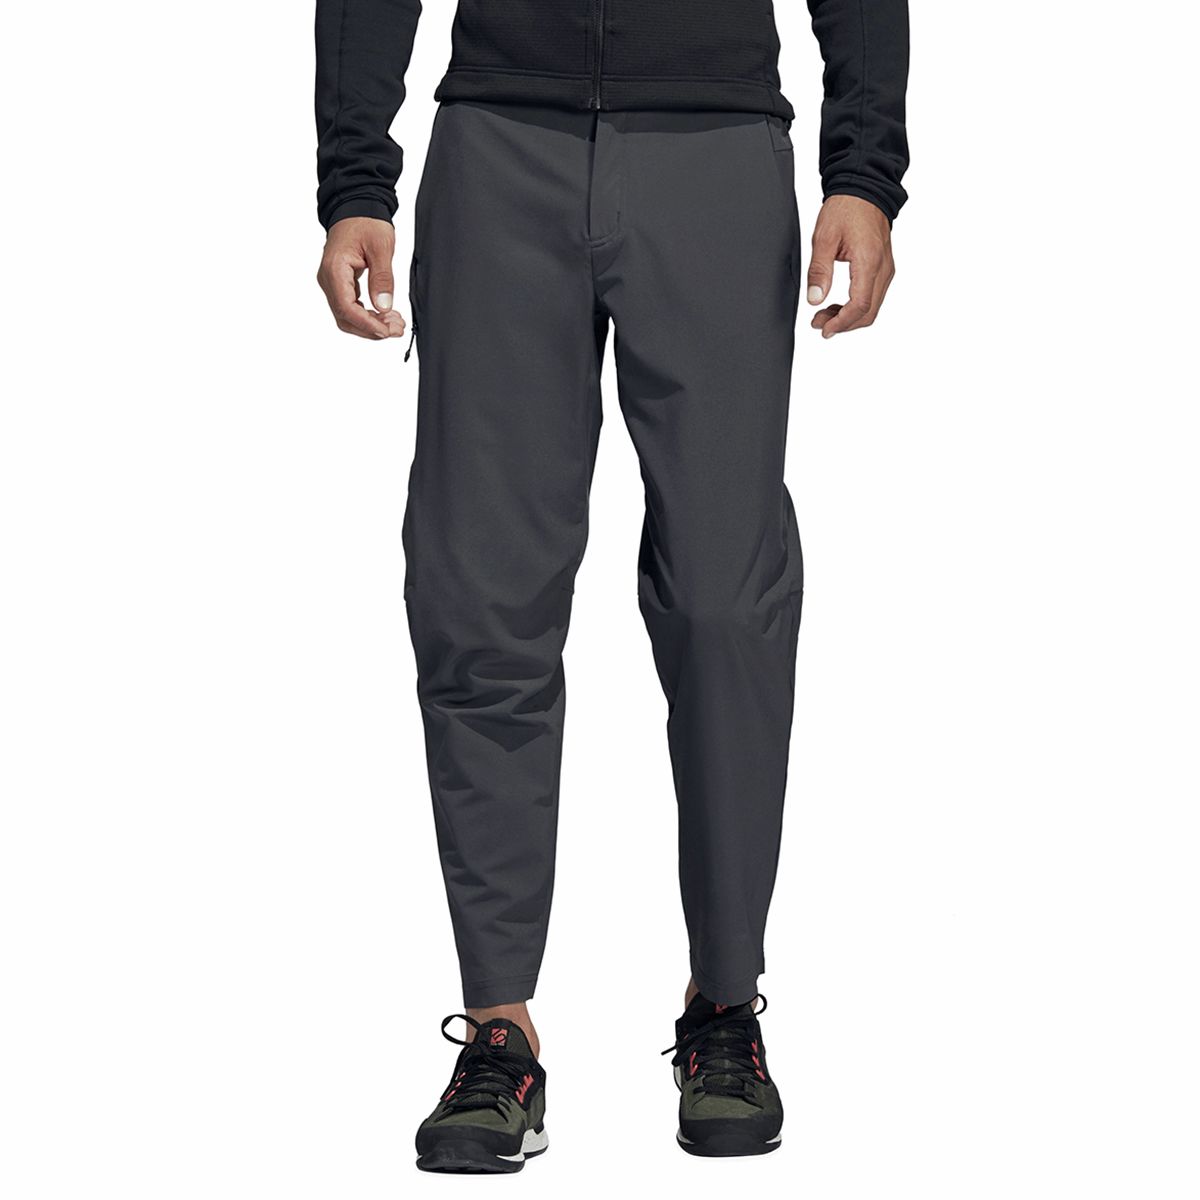 Adidas Outdoor CTC Pant - Men's | Backcountry.com